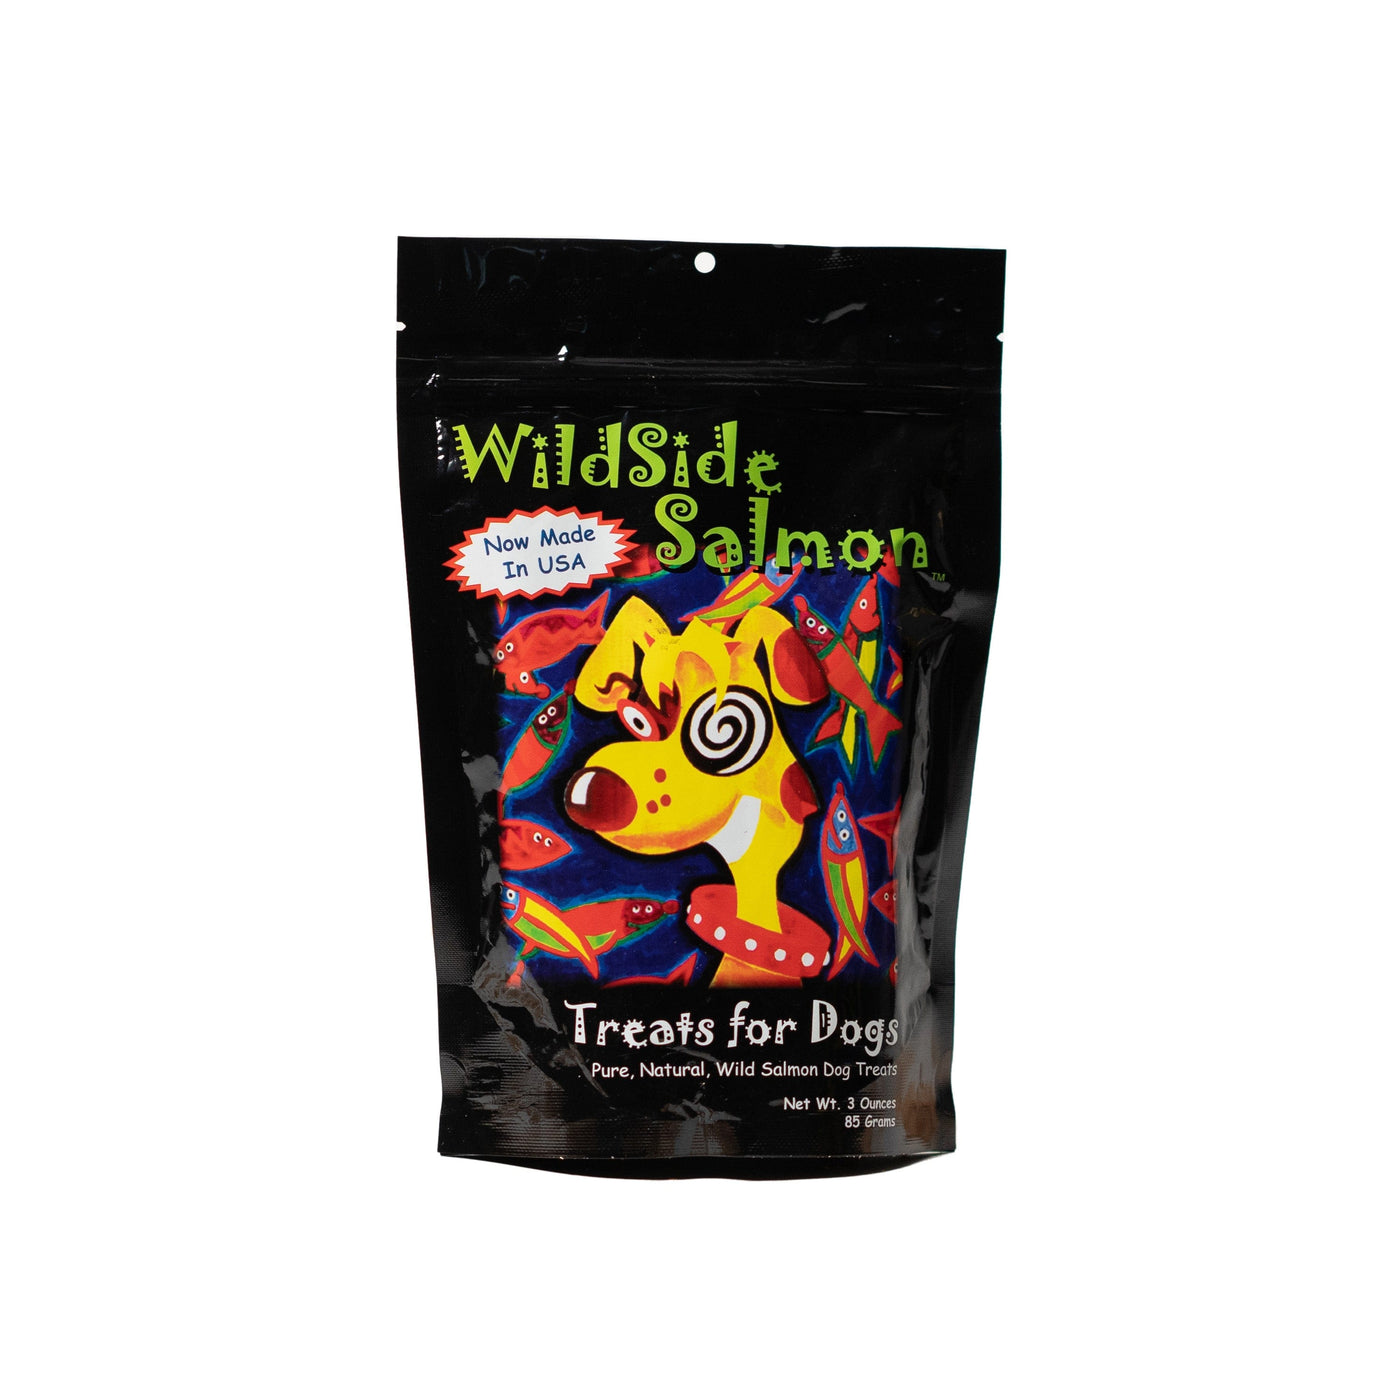 Wildsidesalmon 3oz Dog treats bag front